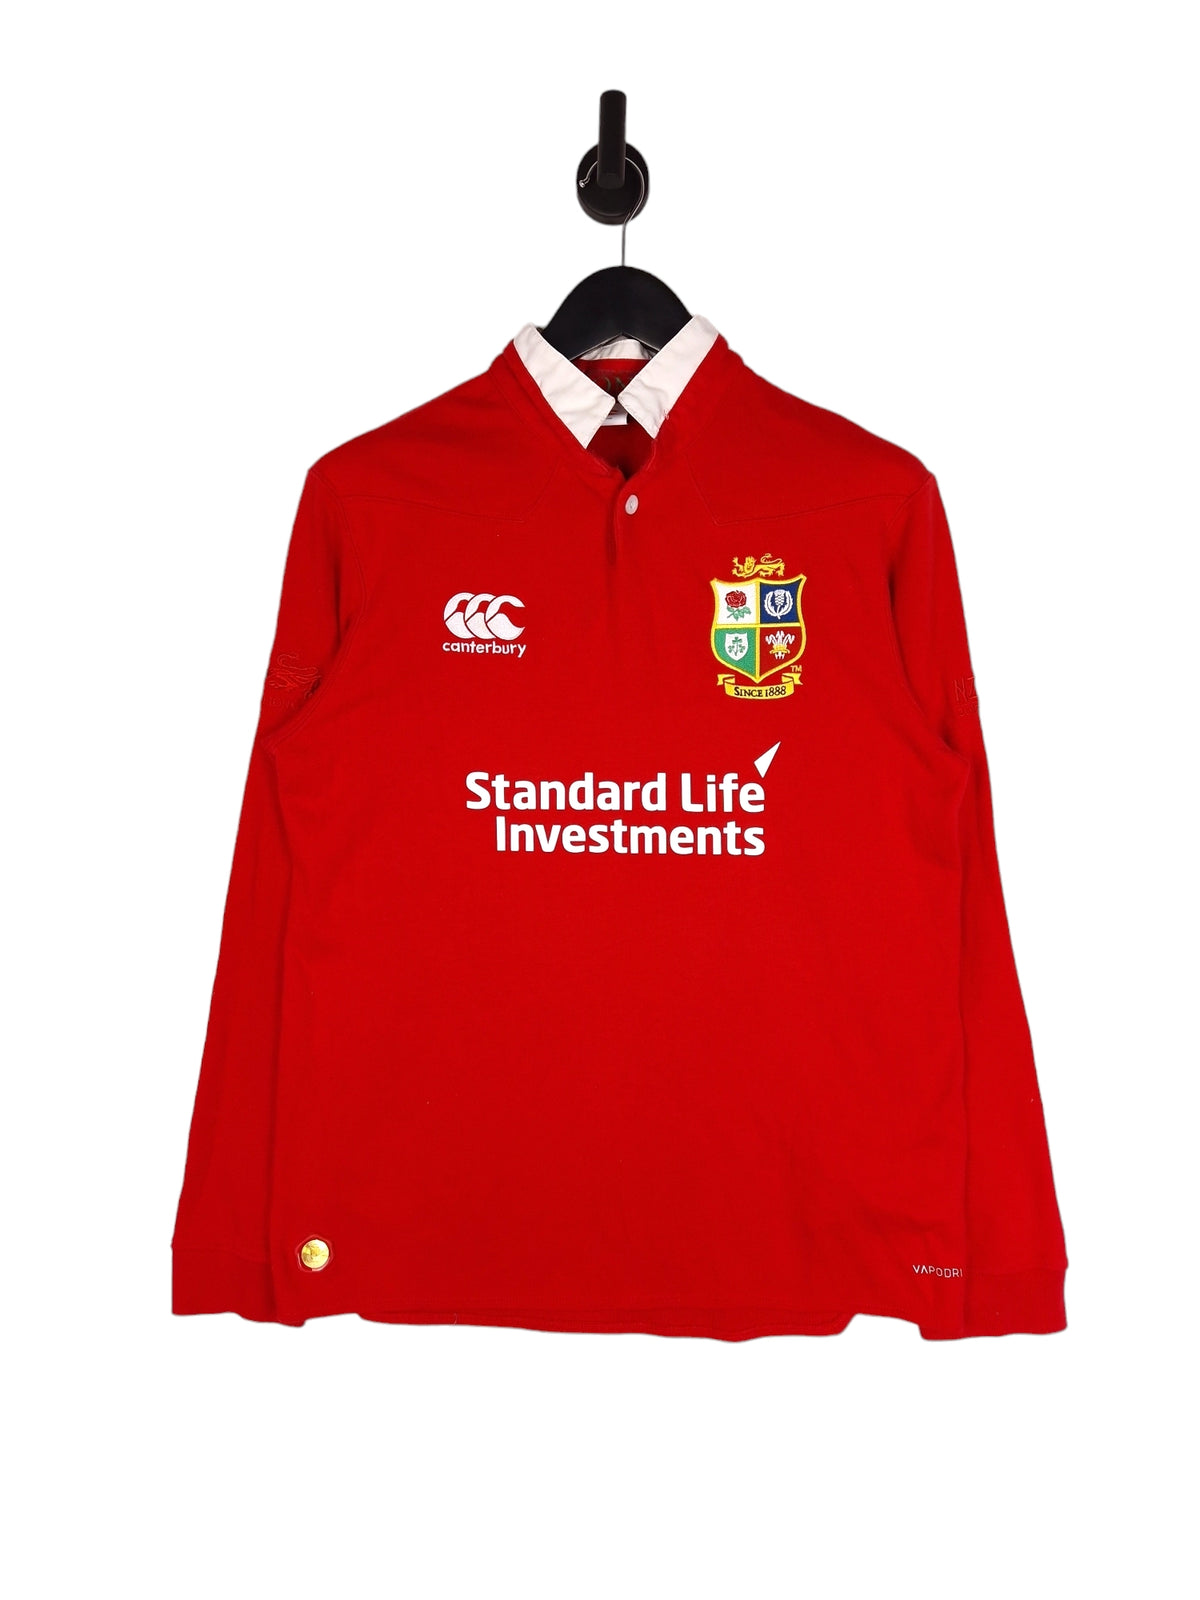 Canterbury British & Irish Lions 2017 Rugby Shirt Long Sleeve - Size Medium